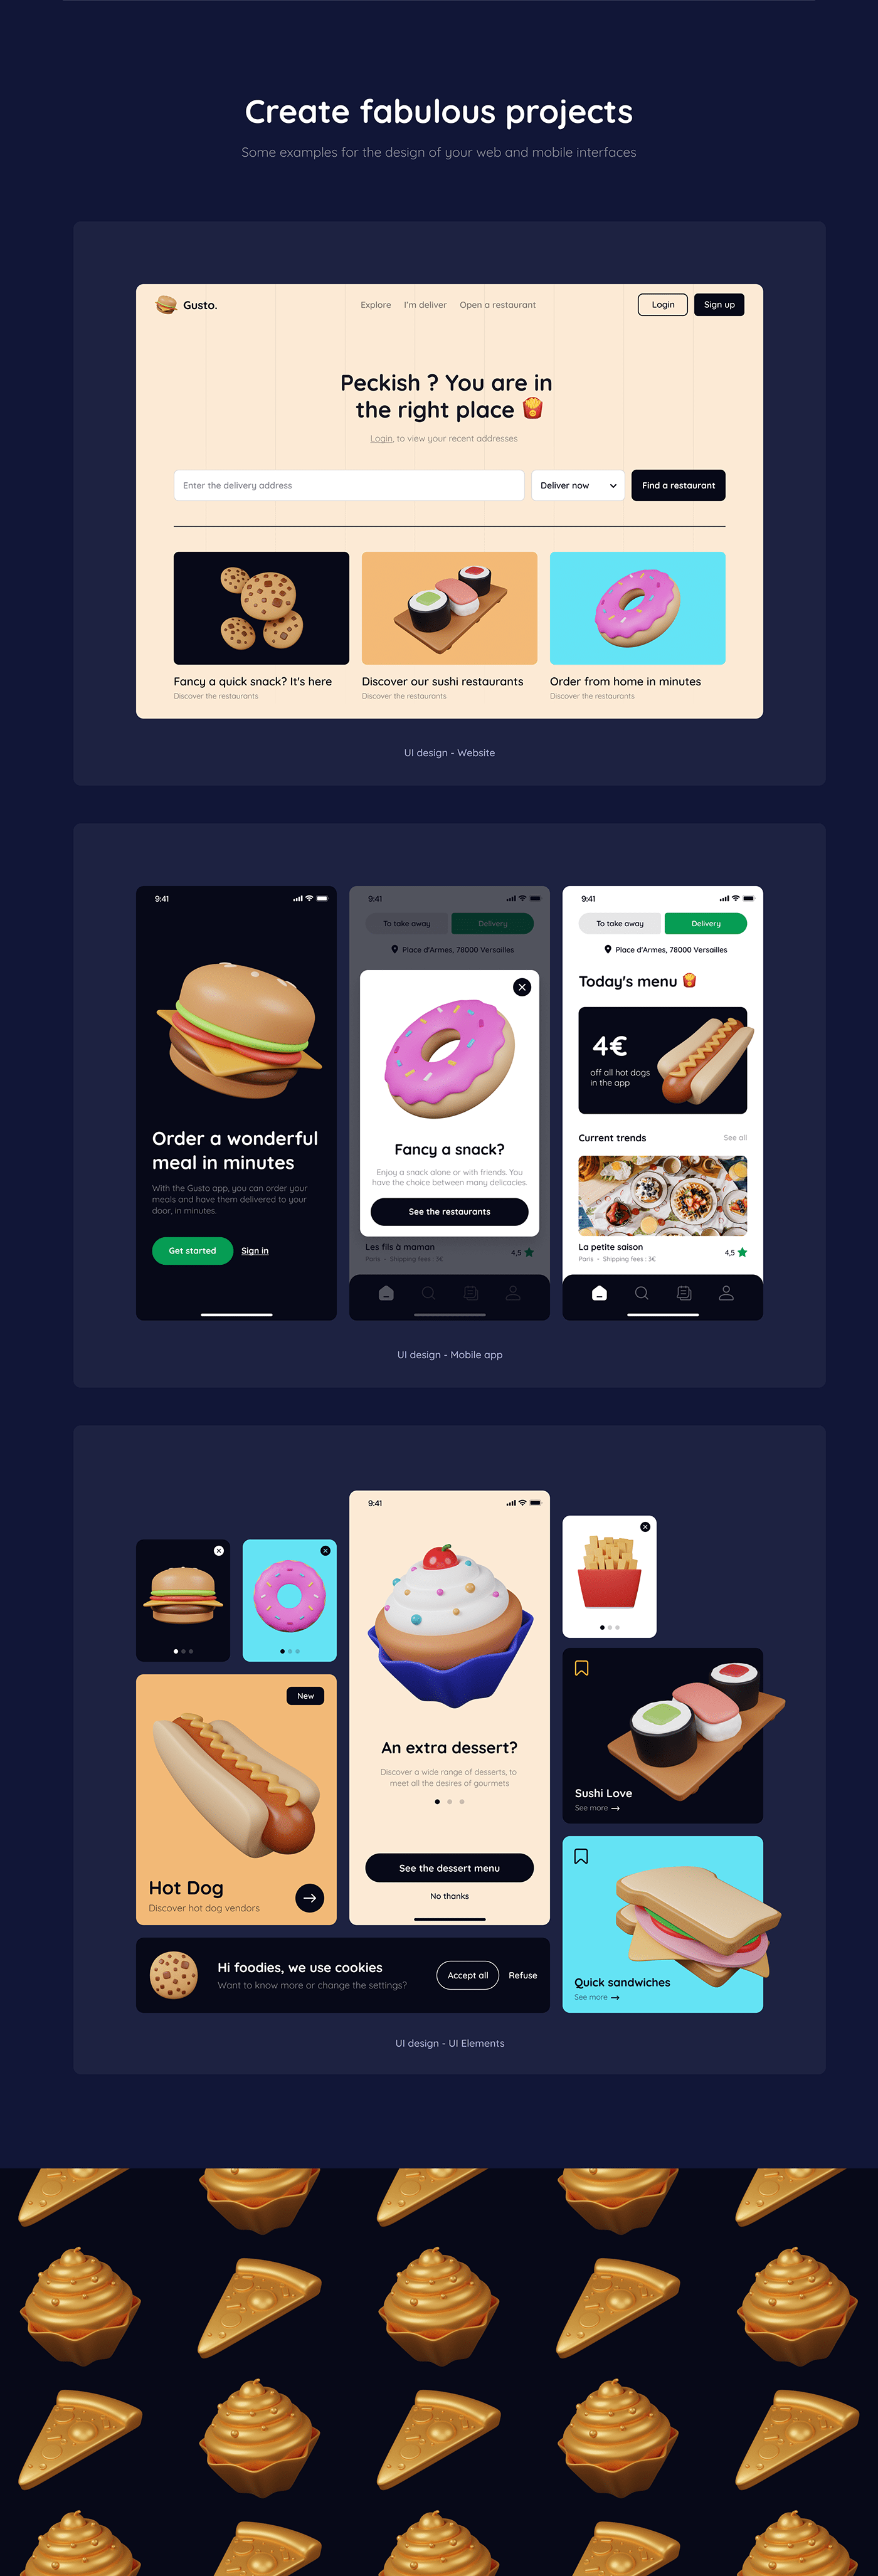 3D 3D Assets 3d icons app assets Food  icons icons pack illustration 3d junk food